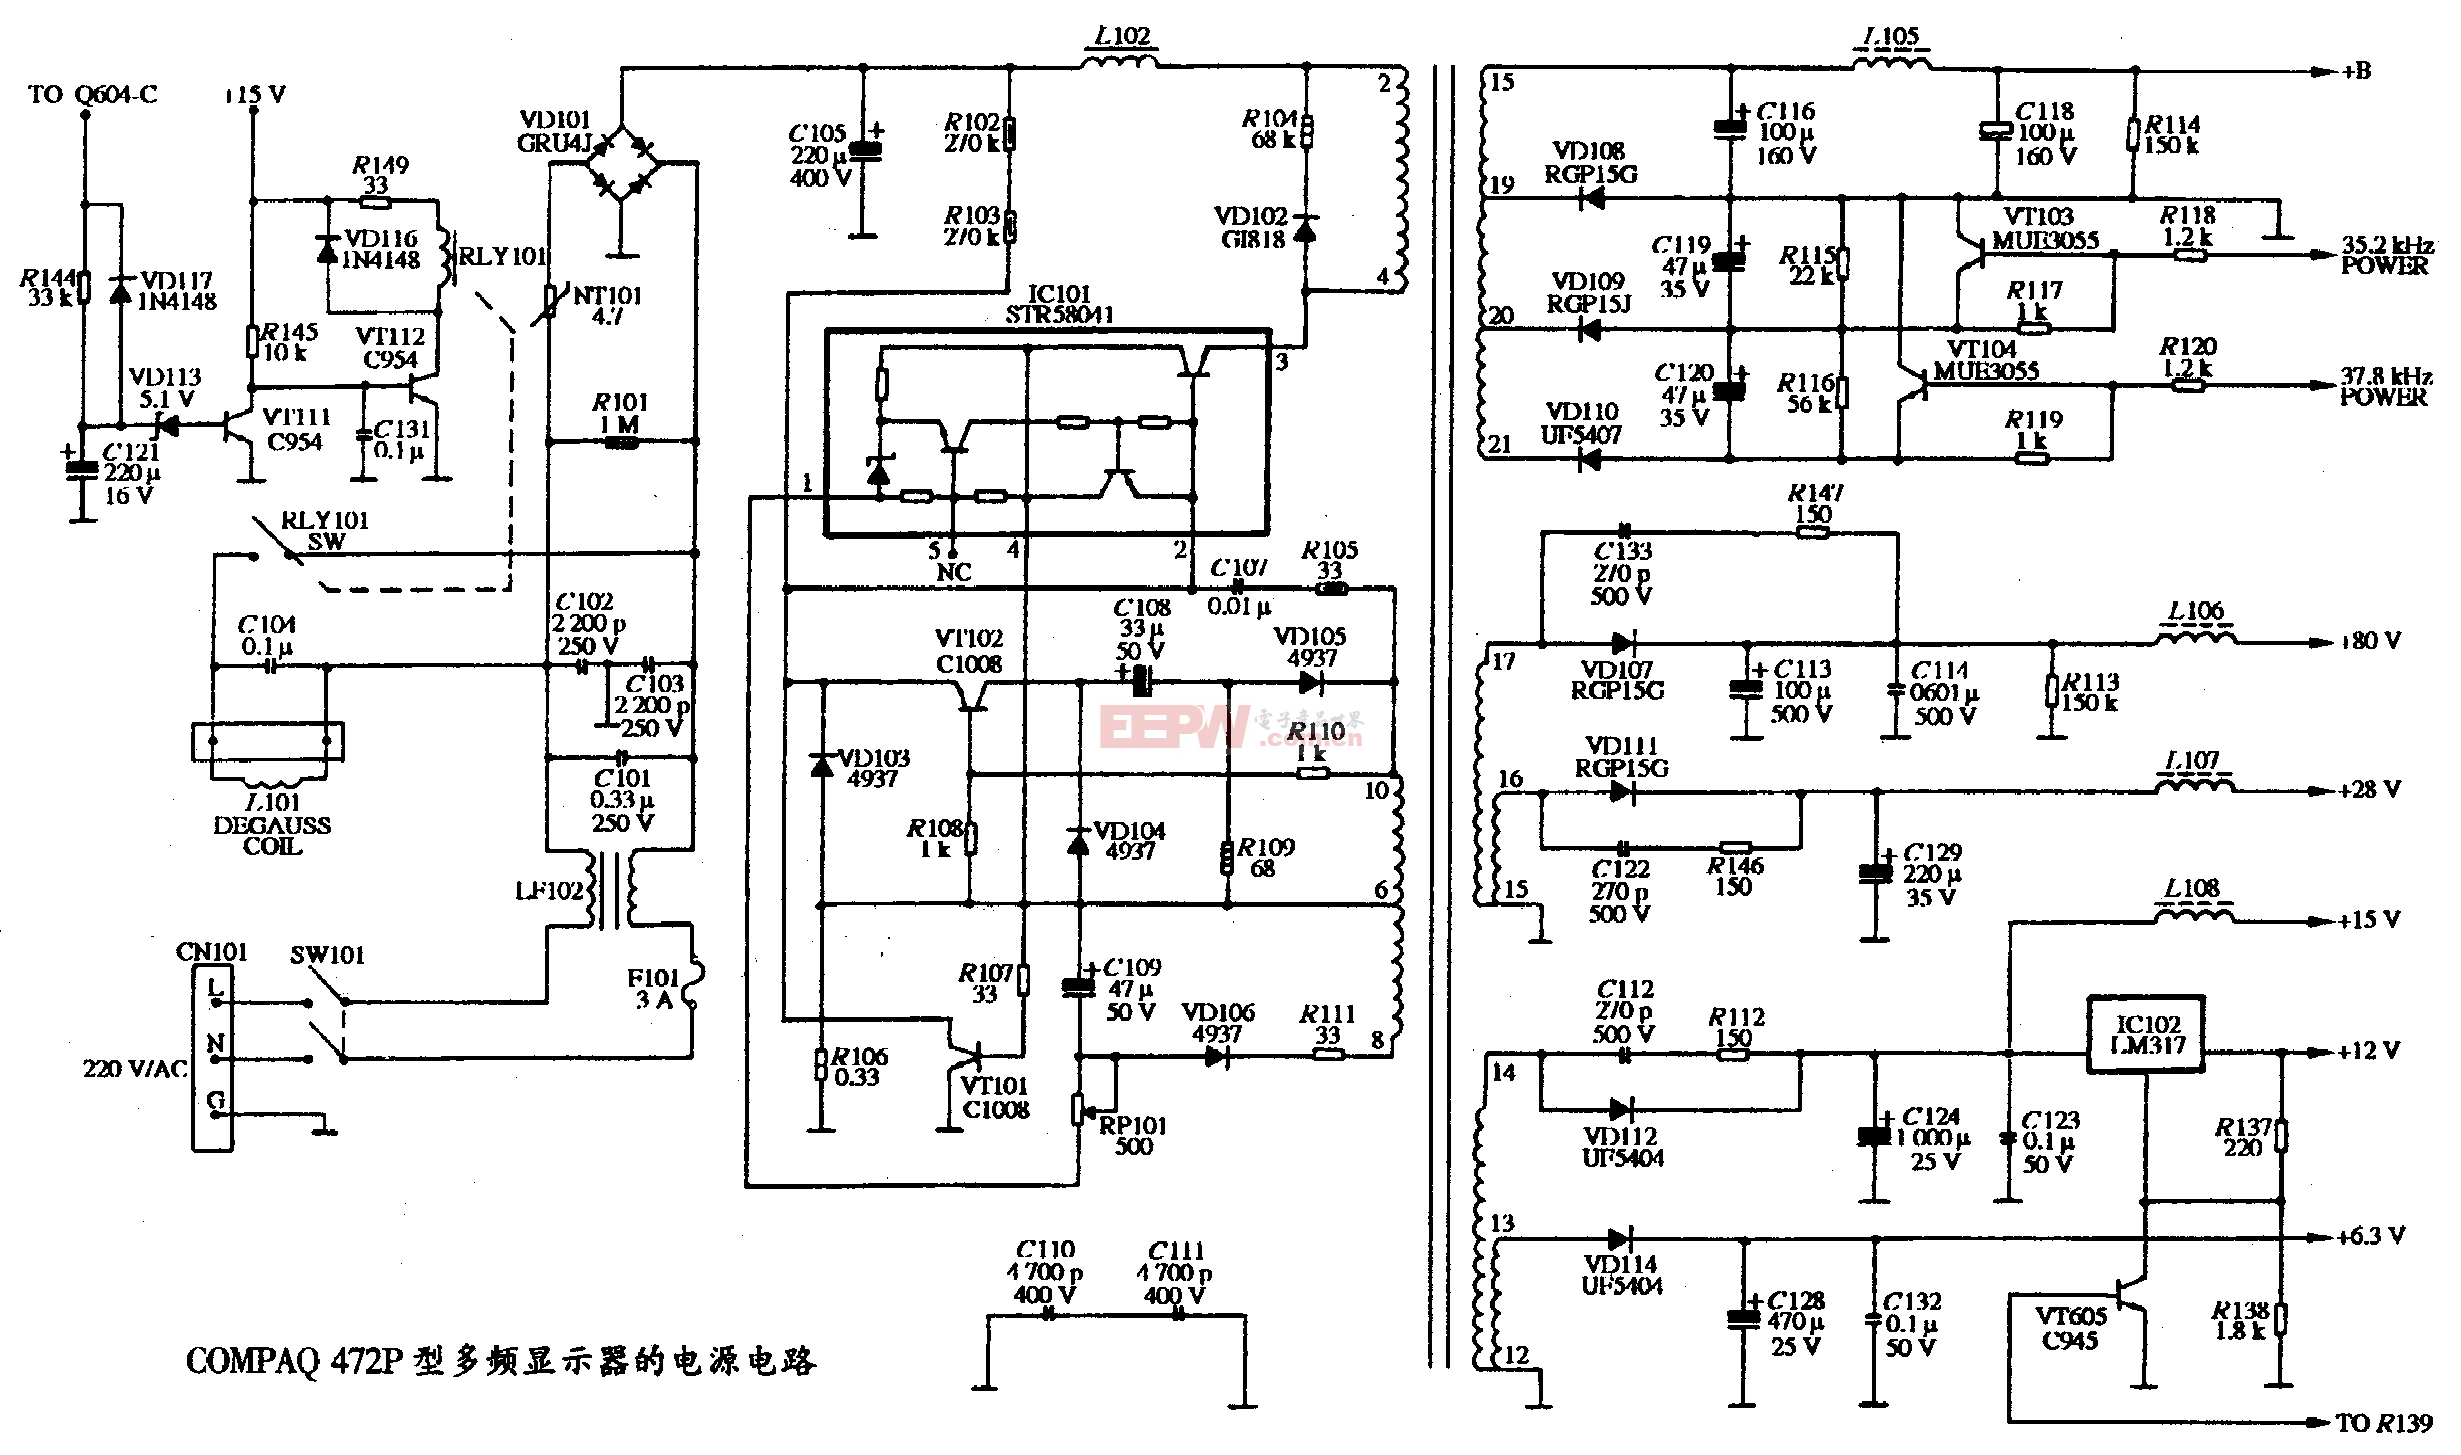 29、COMPAQ 472P型多频显示器的电源电路图